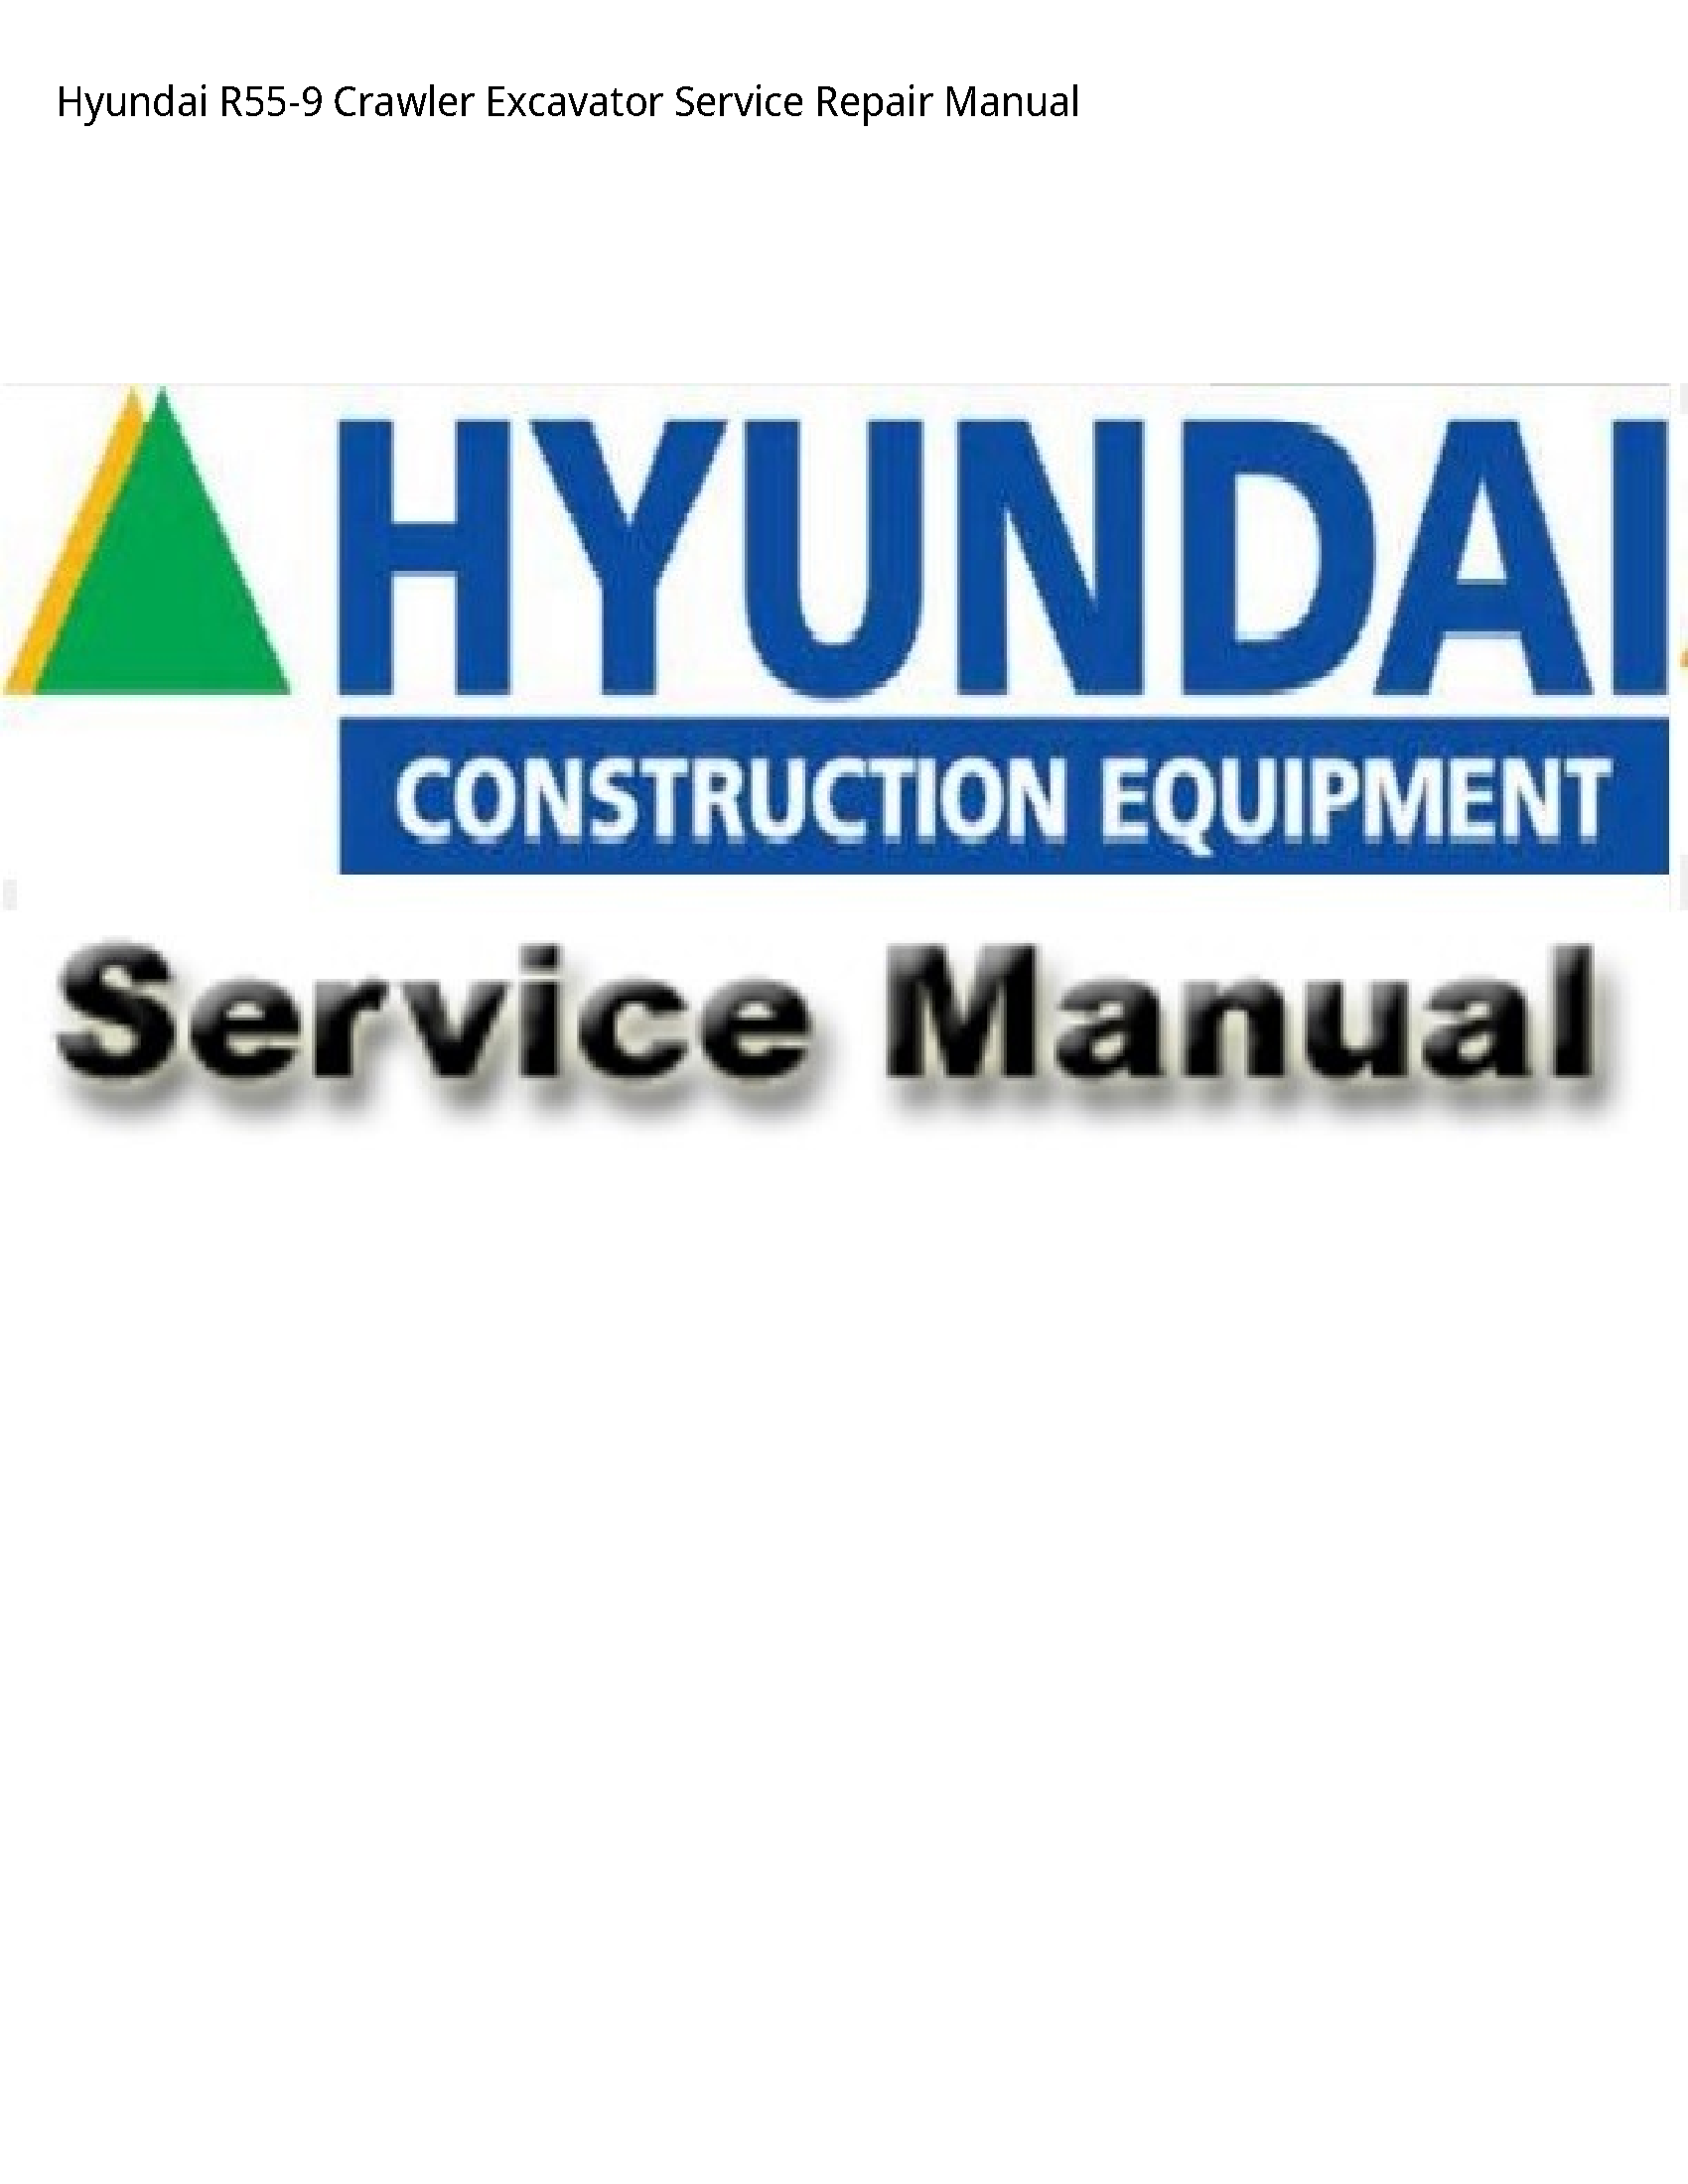 Hyundai R55-9 Crawler Excavator manual